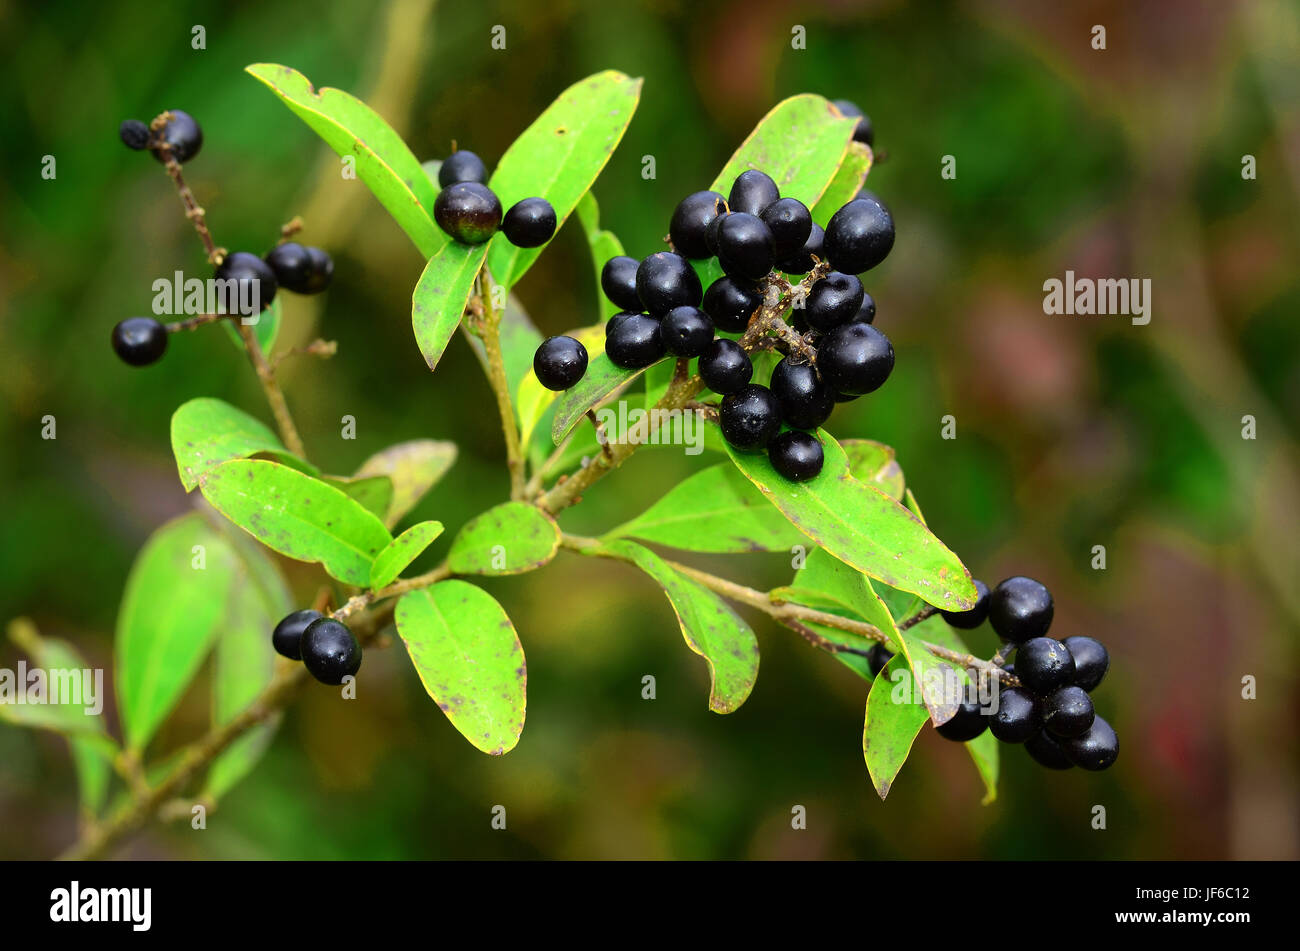 privet, berries, poisonous, blackberries Stock Photo